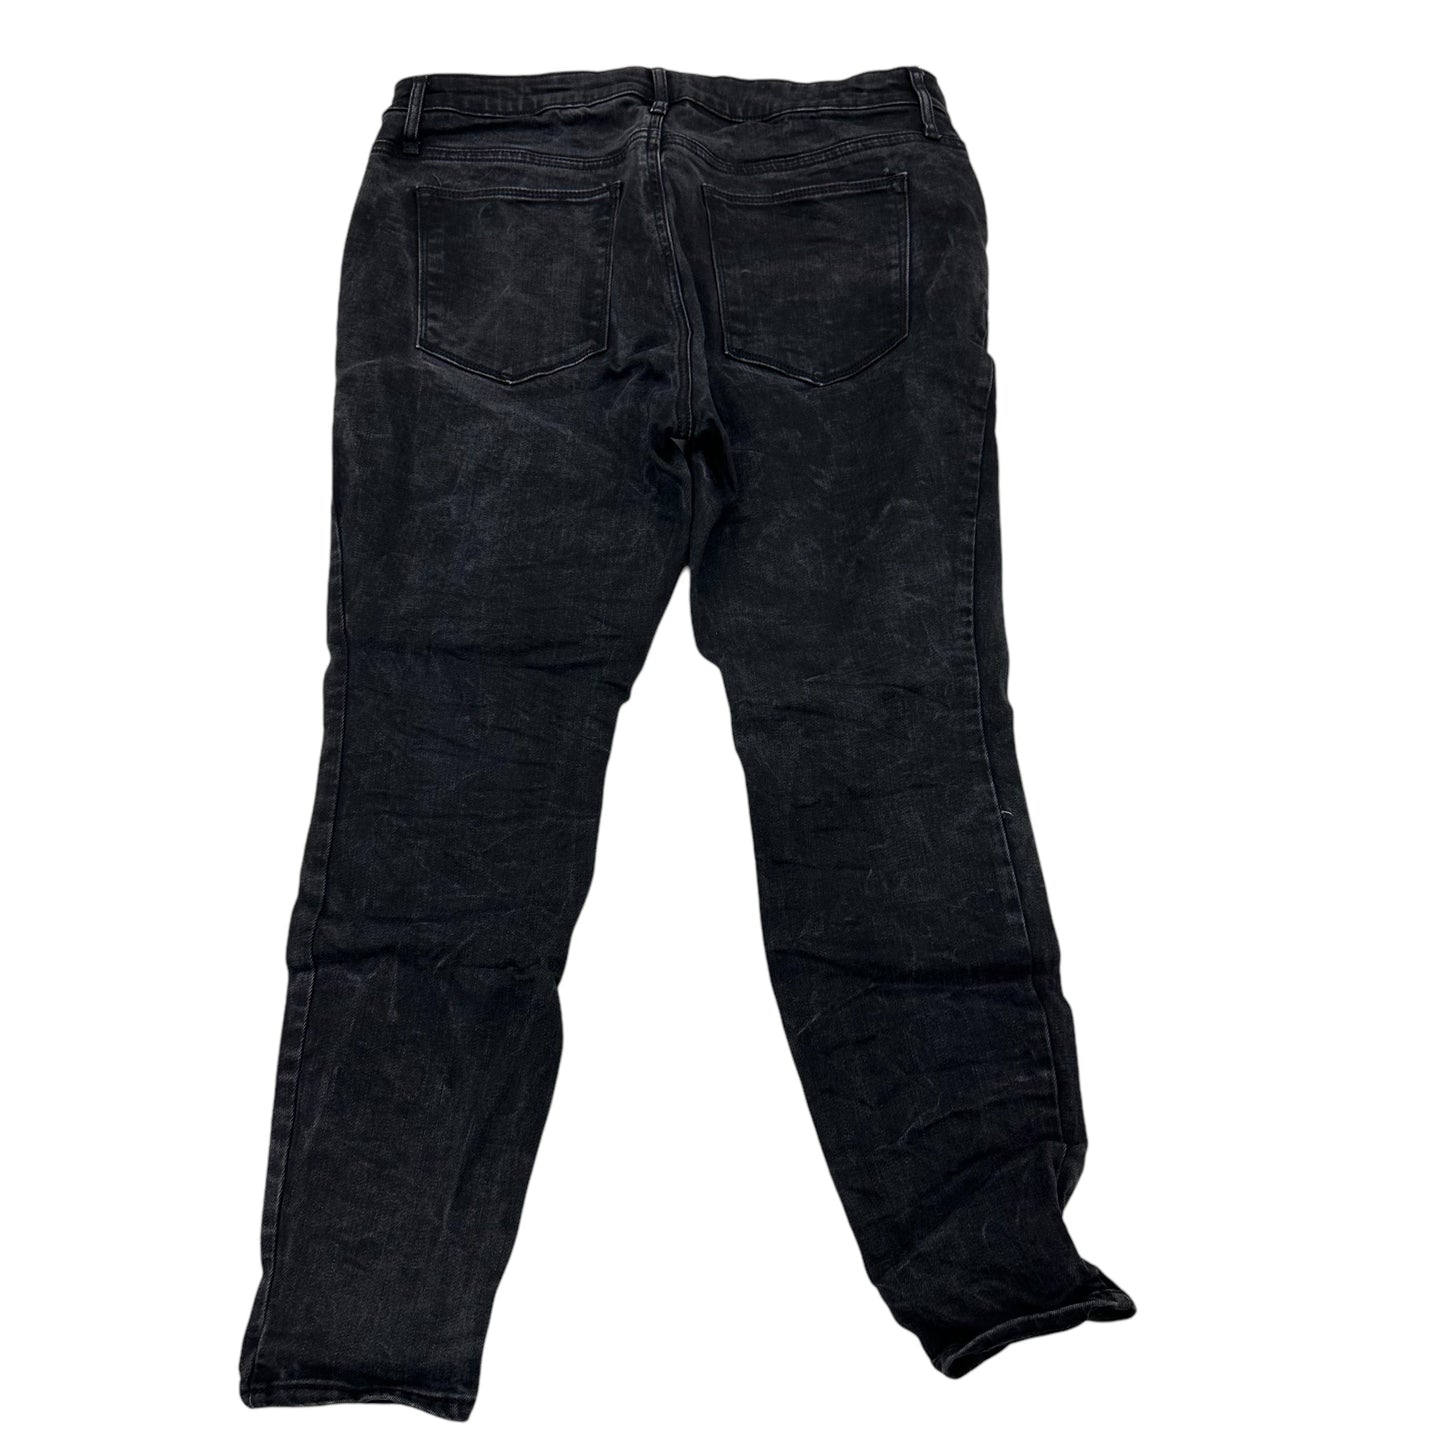 Maternity Jeans By Gap  Size: 12petite